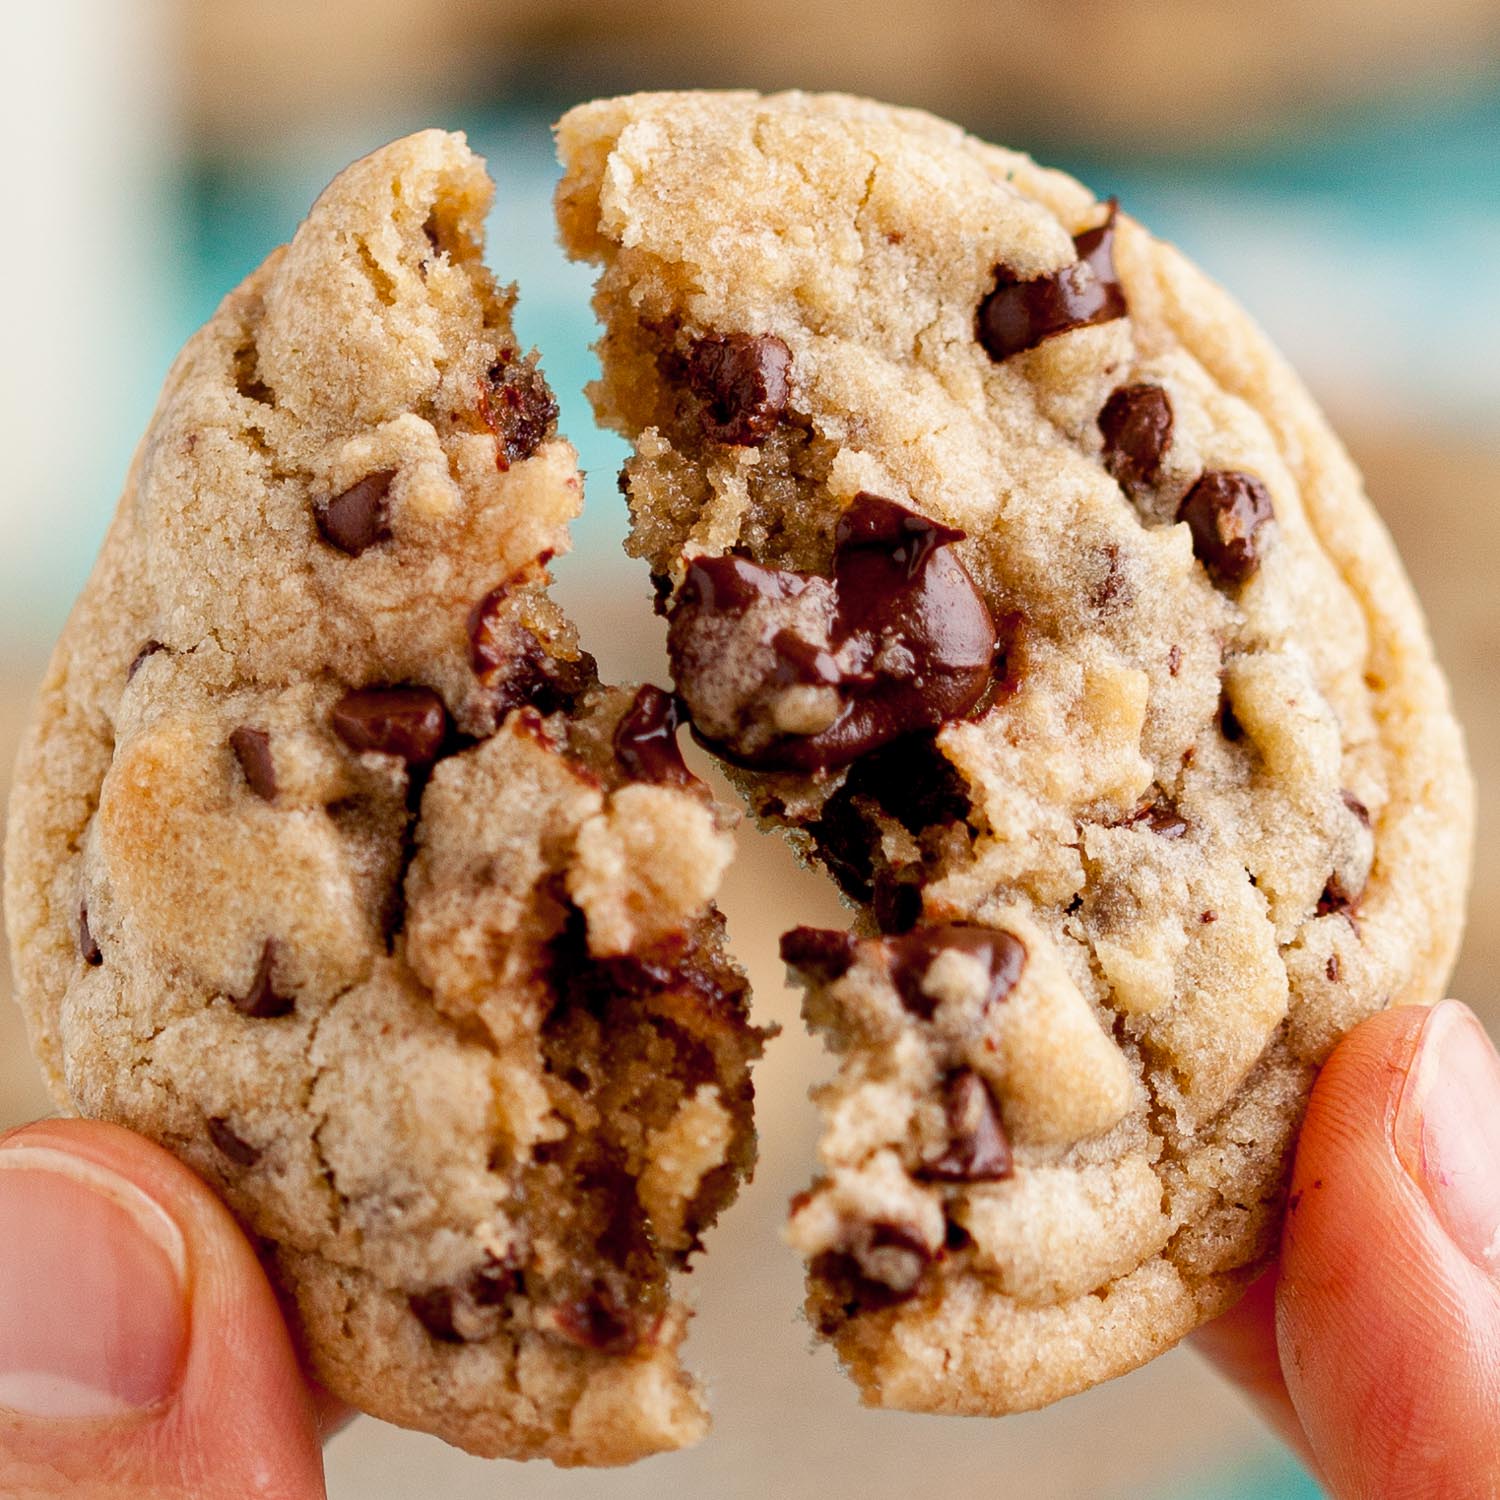 https://www.chewoutloud.com/wp-content/uploads/2022/10/Bakery-Style-Chocolate-Chip-Cookies-Split-in-Half-Square.jpg